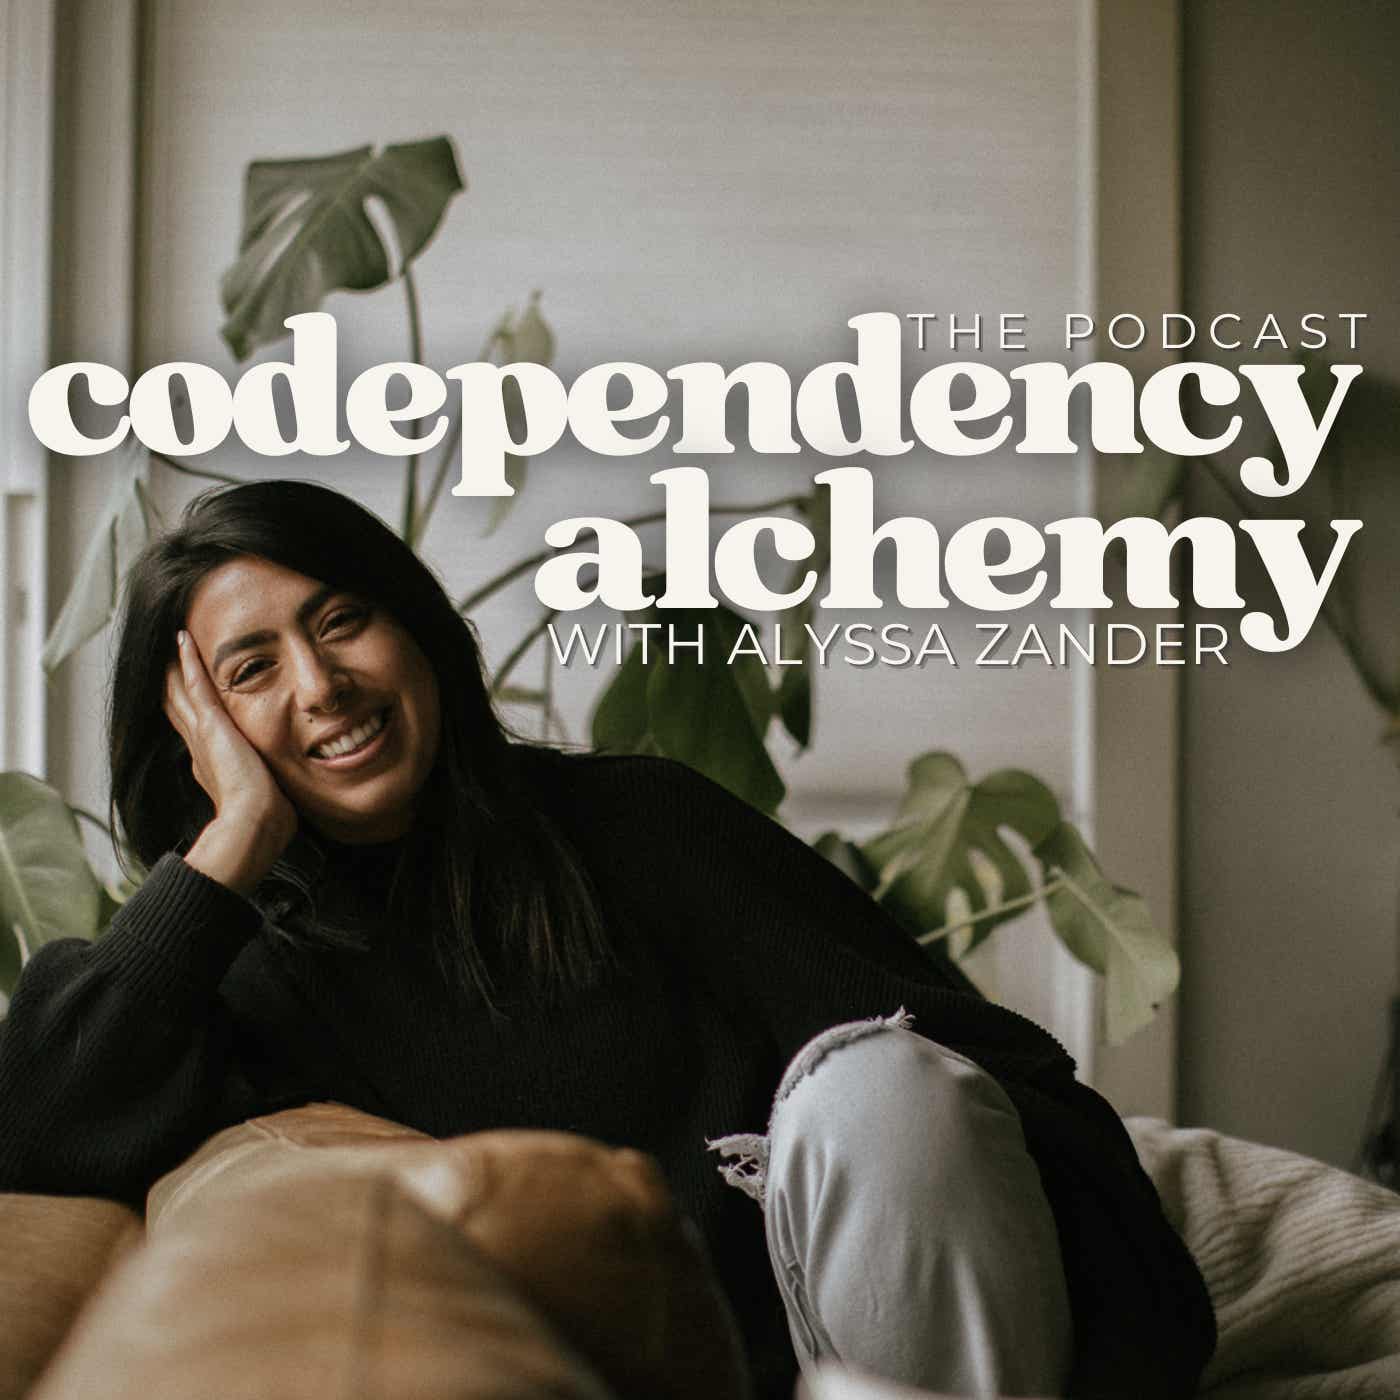 Codependency Alchemy: The Podcast